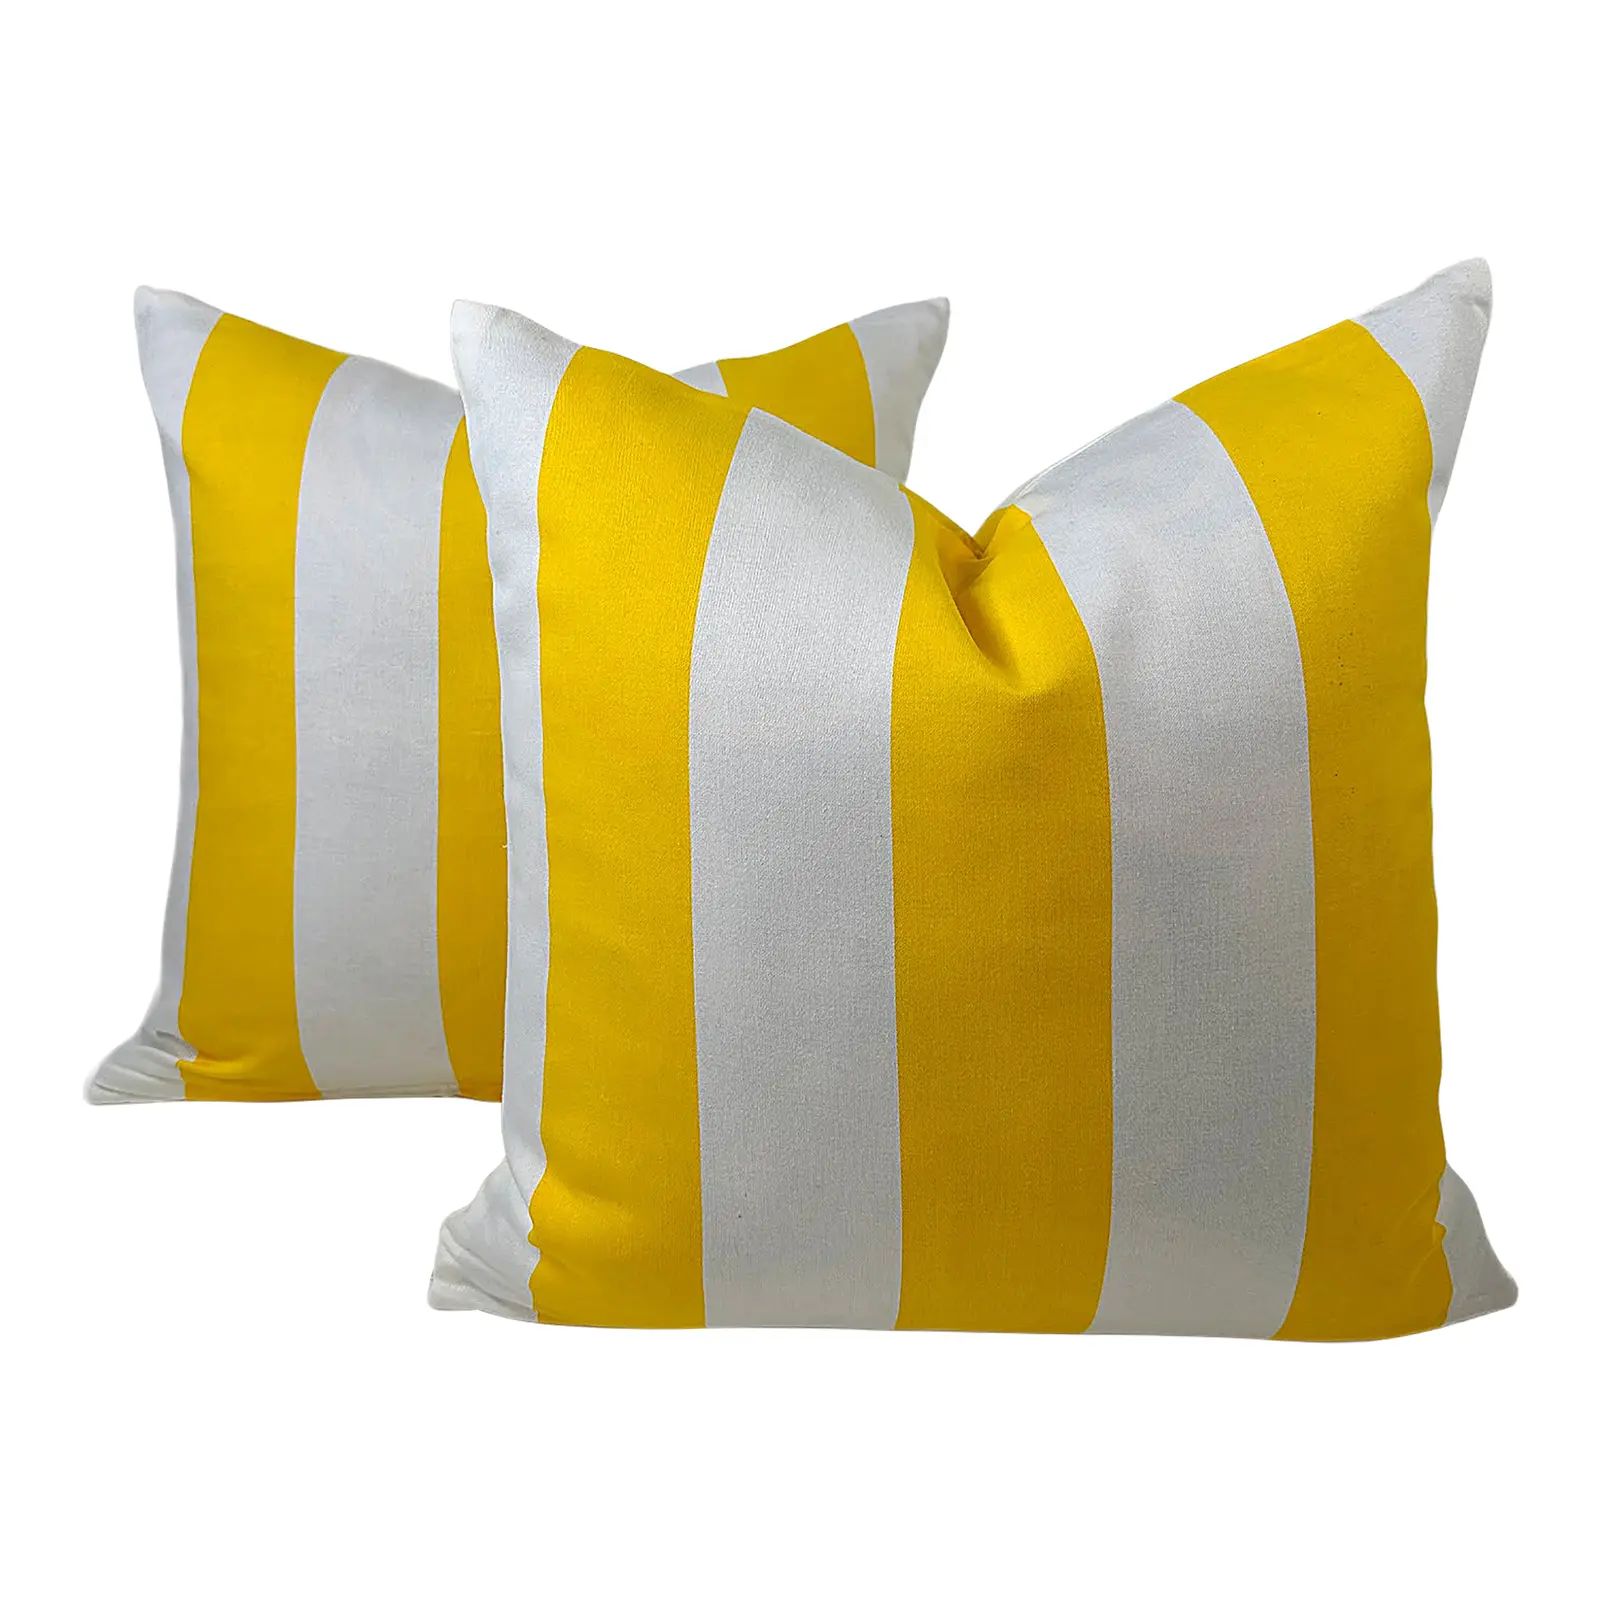 Carlton Varney Yellow & White Cabana Stripe Pillow Covers - a Pair | Chairish